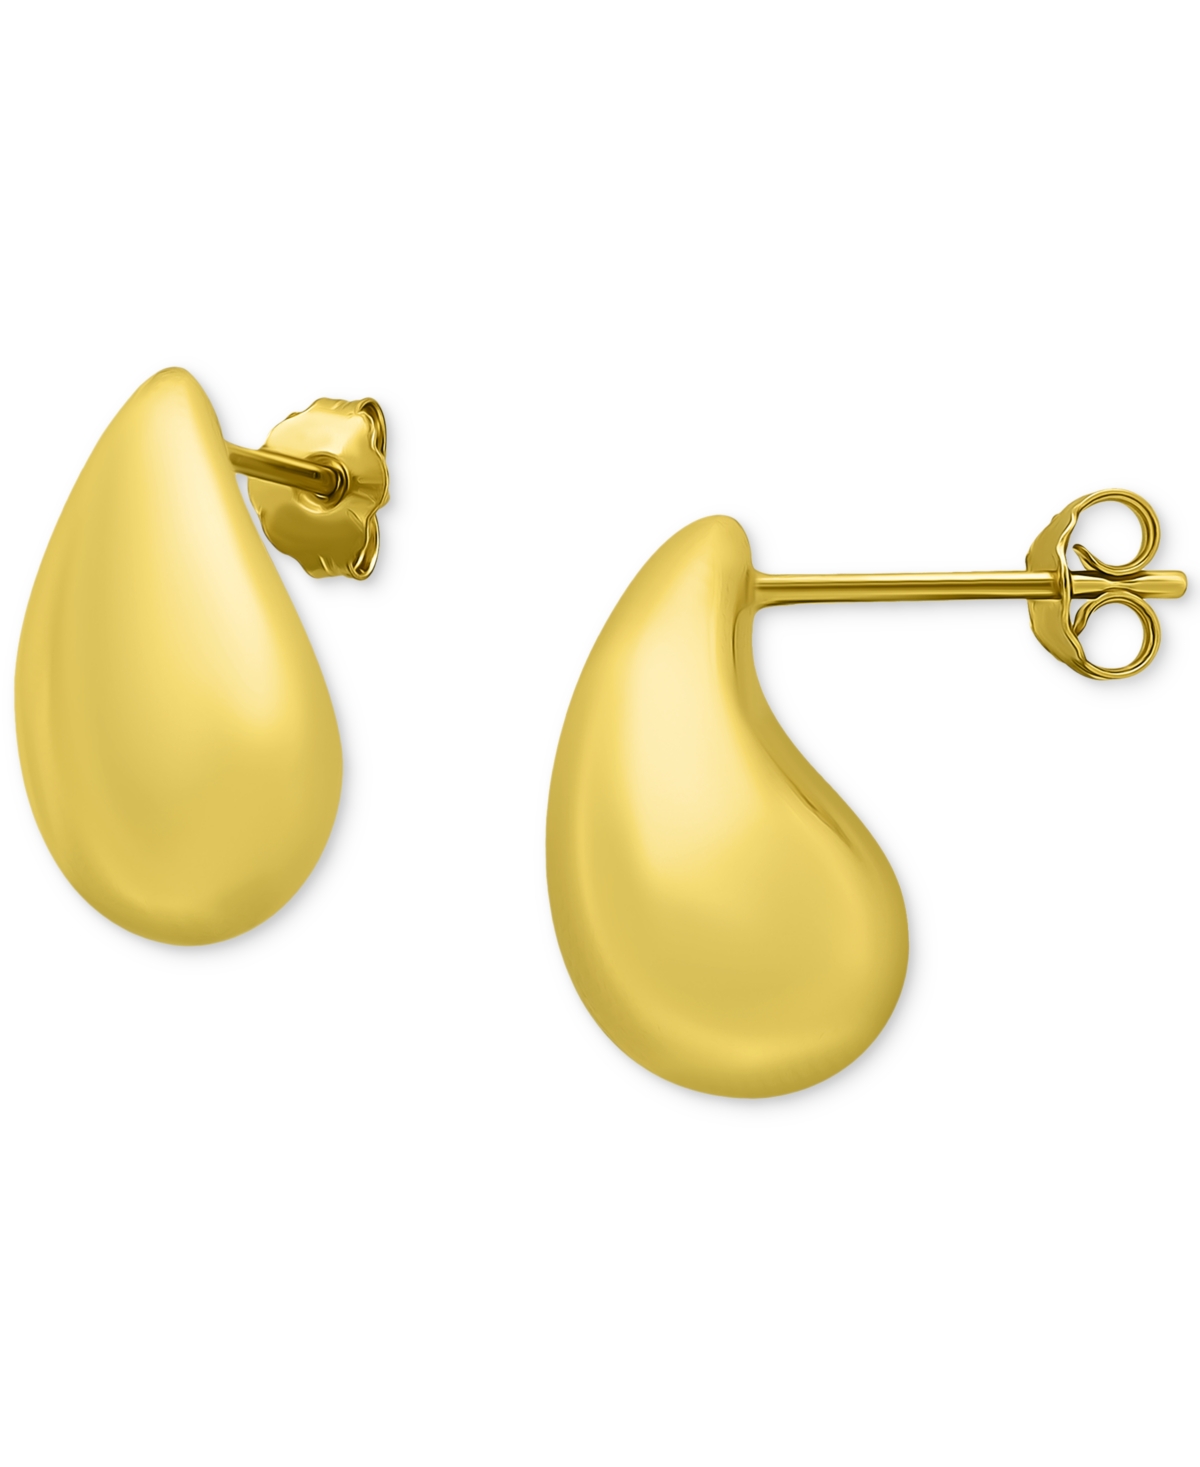 Giani Bernini Polished Teardrop Stud Earrings, Created For Macy's In Gold Over Silver